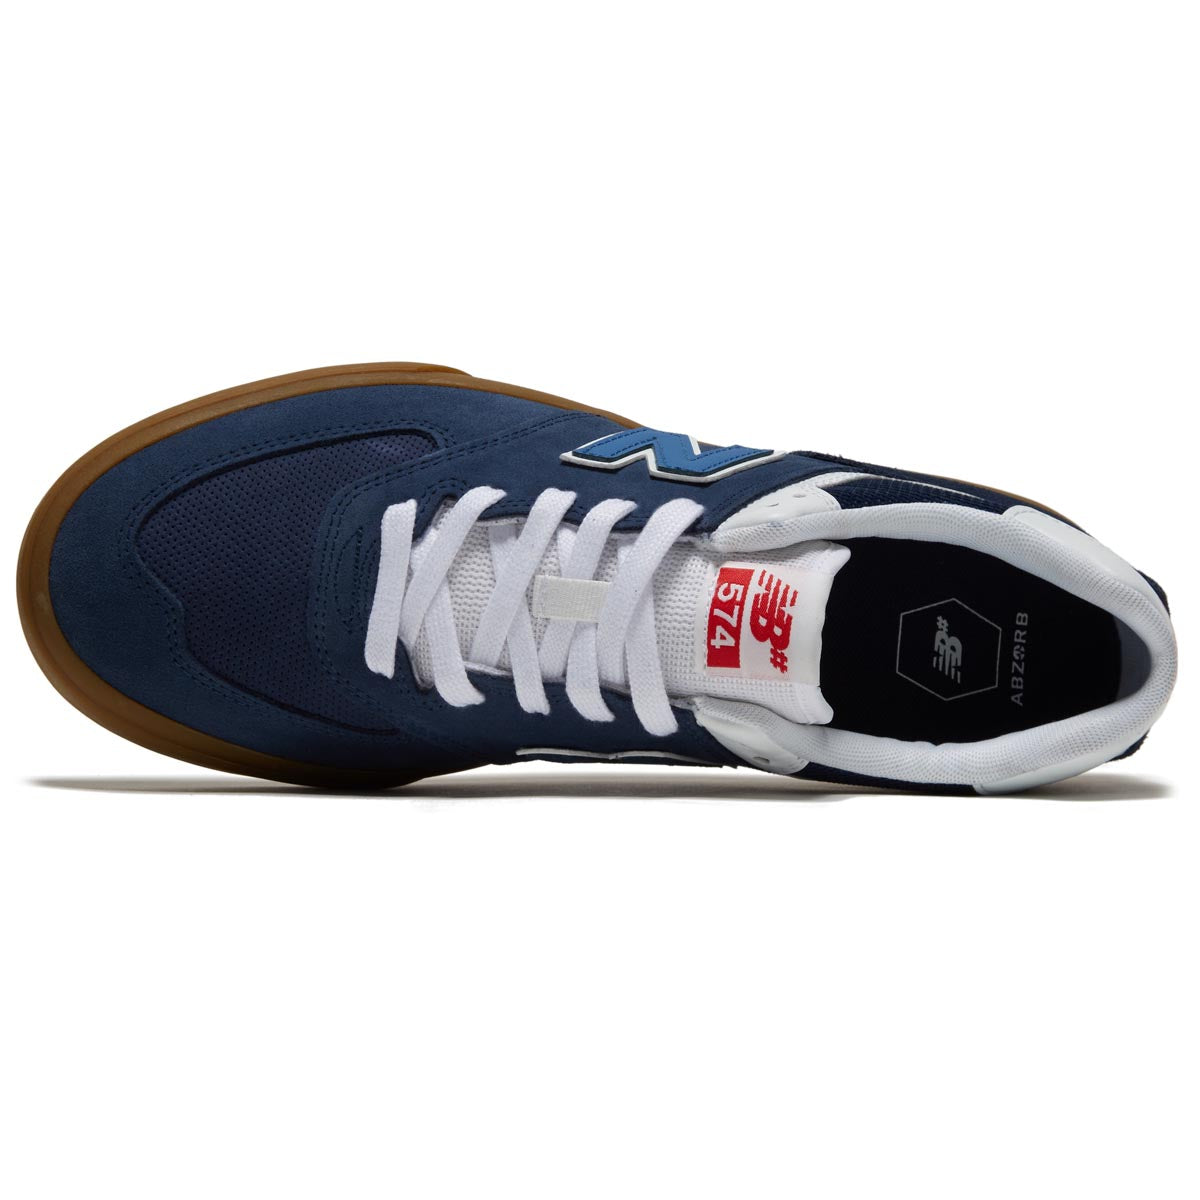 New Balance 574 Vulc Shoes - Navy/Gum image 3